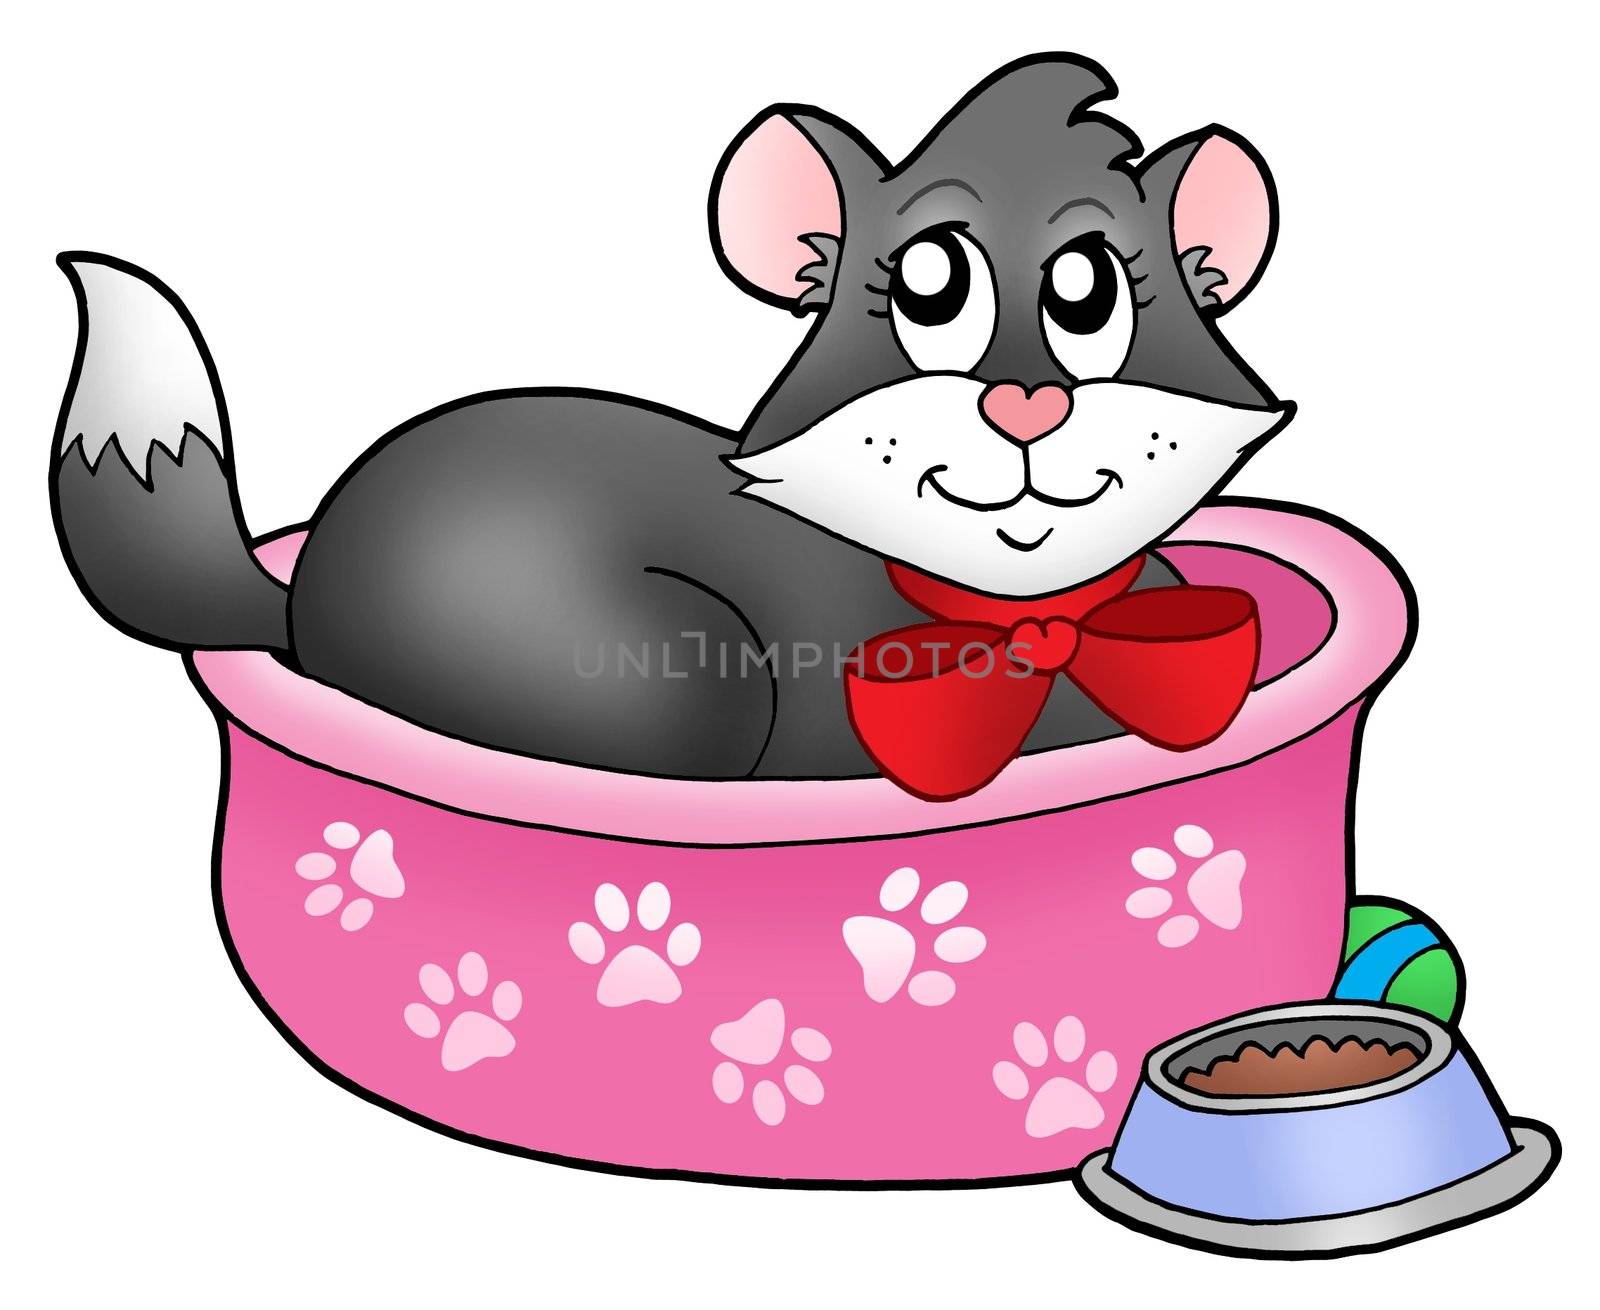 Cute cat in den - color illustration.